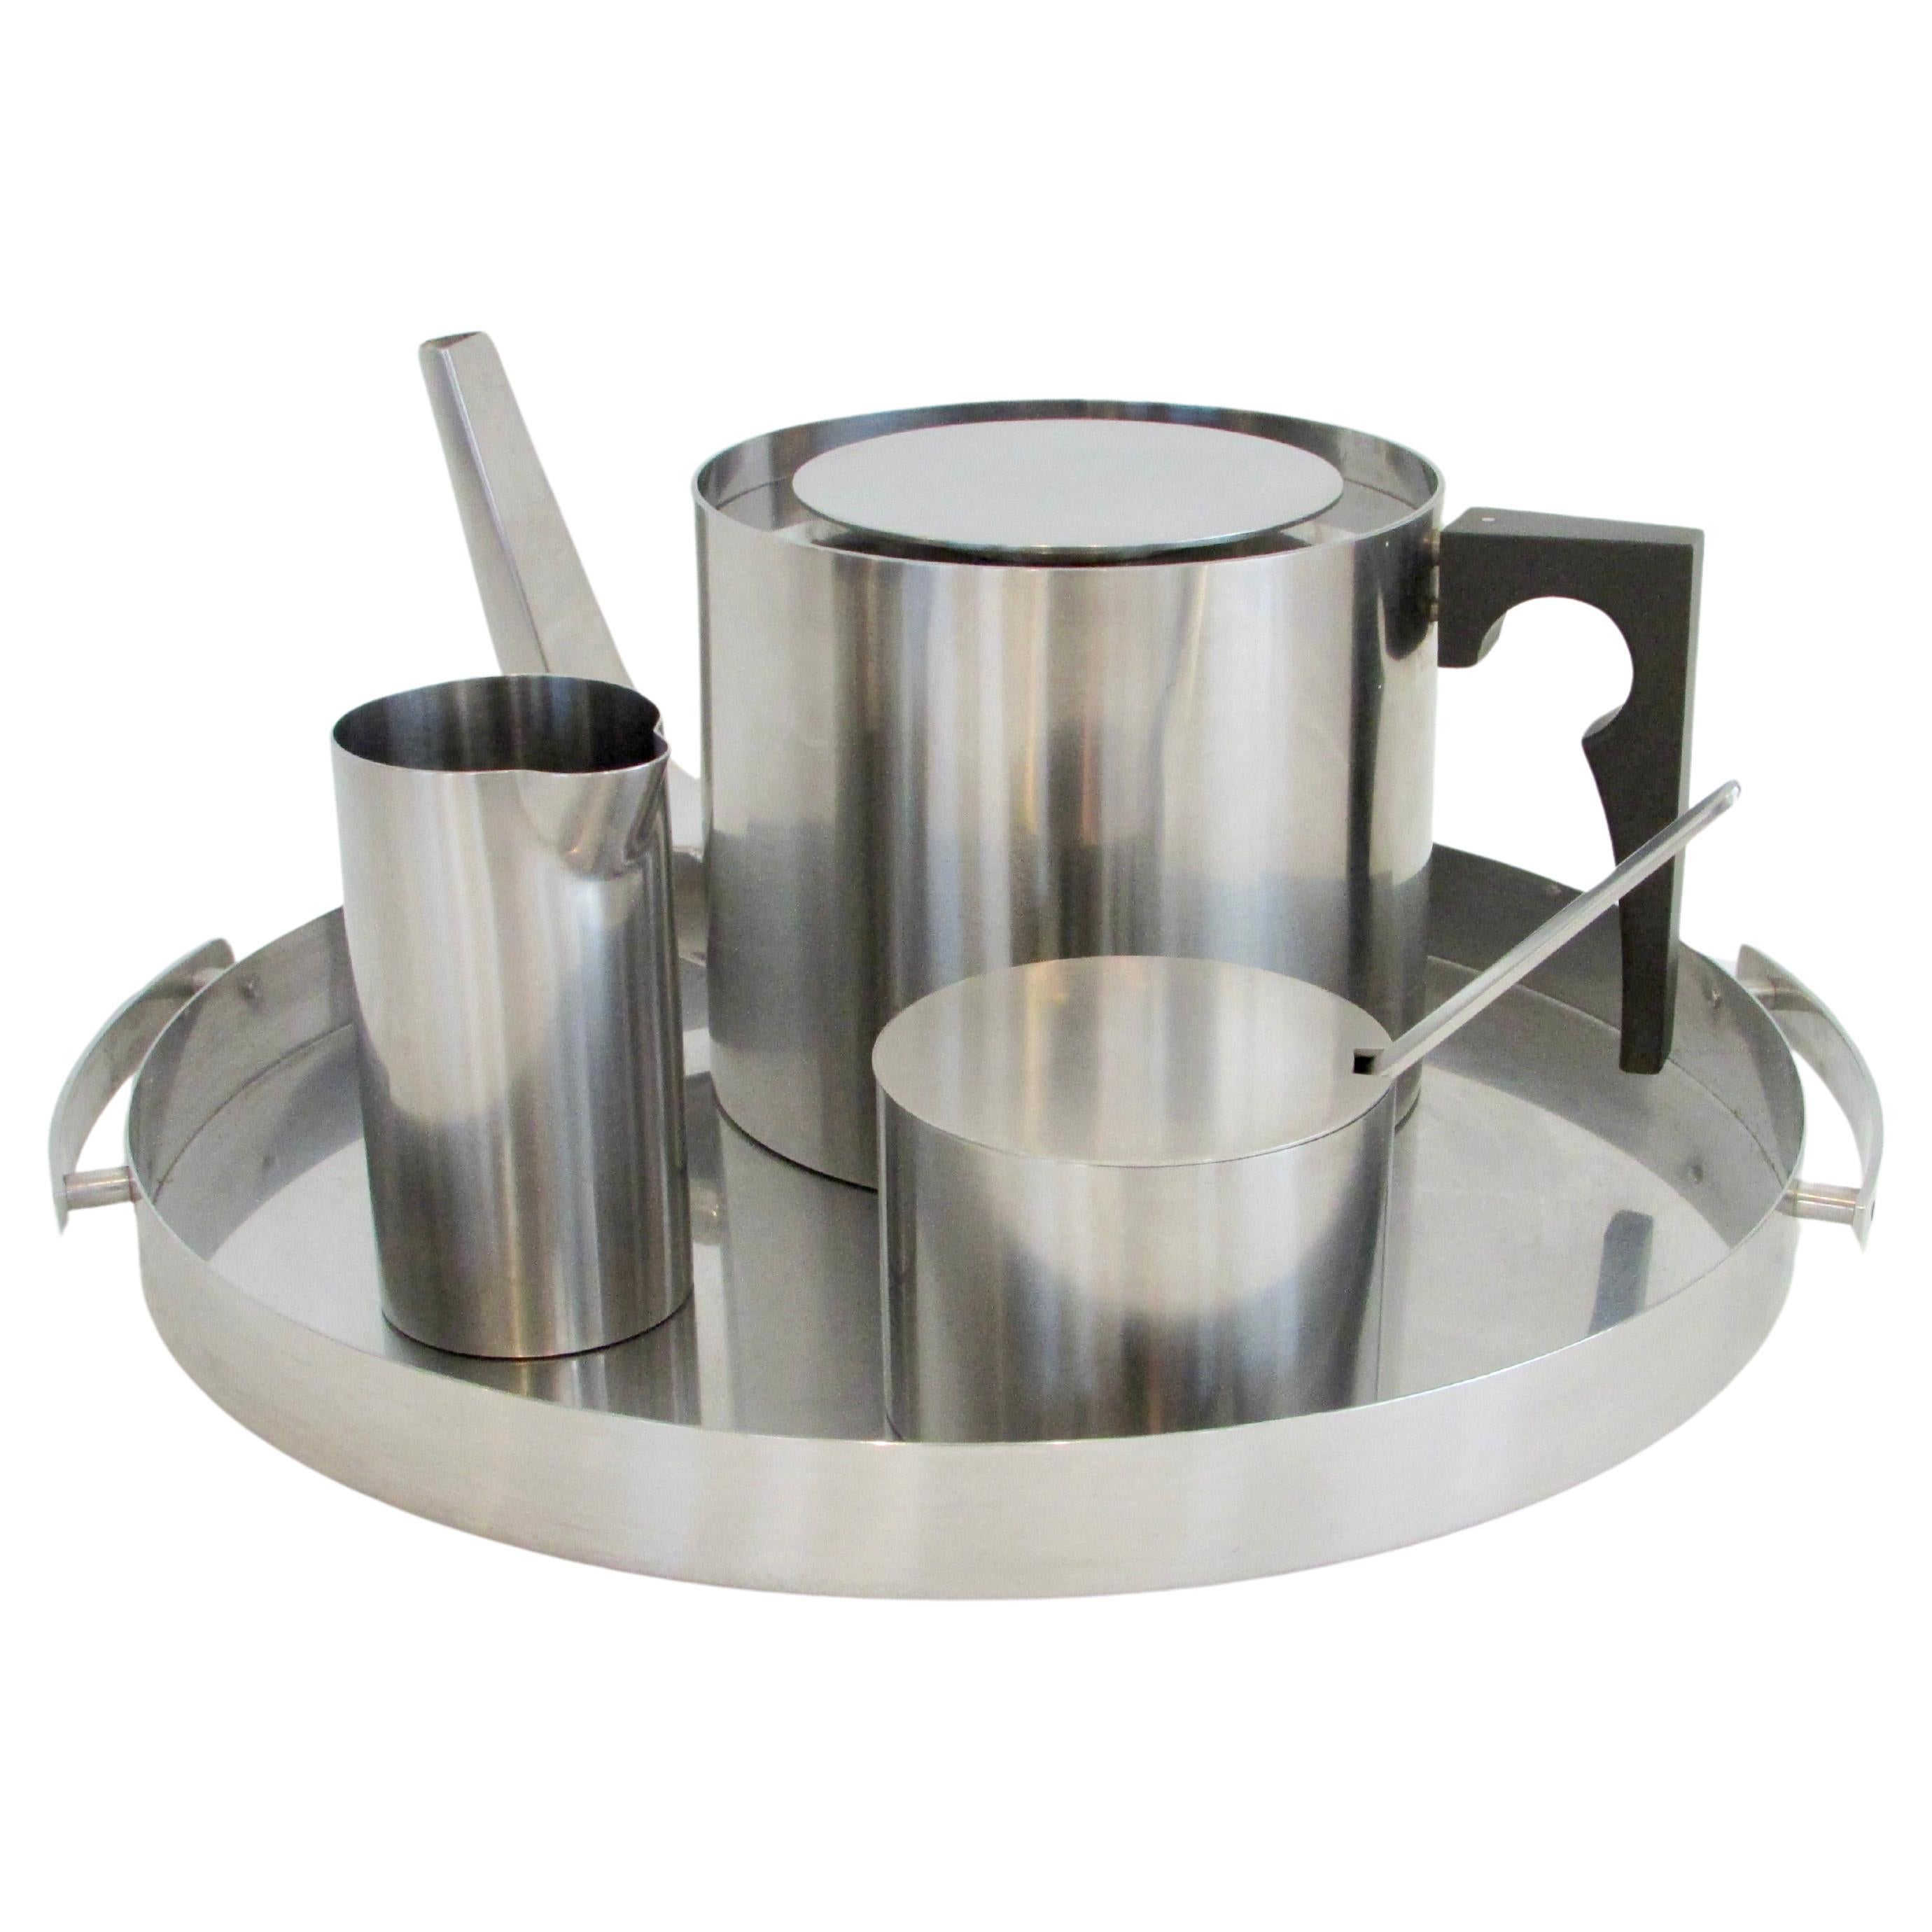 Five piece Arne Jacobsen Stelton stainless steel modernist tea service For Sale